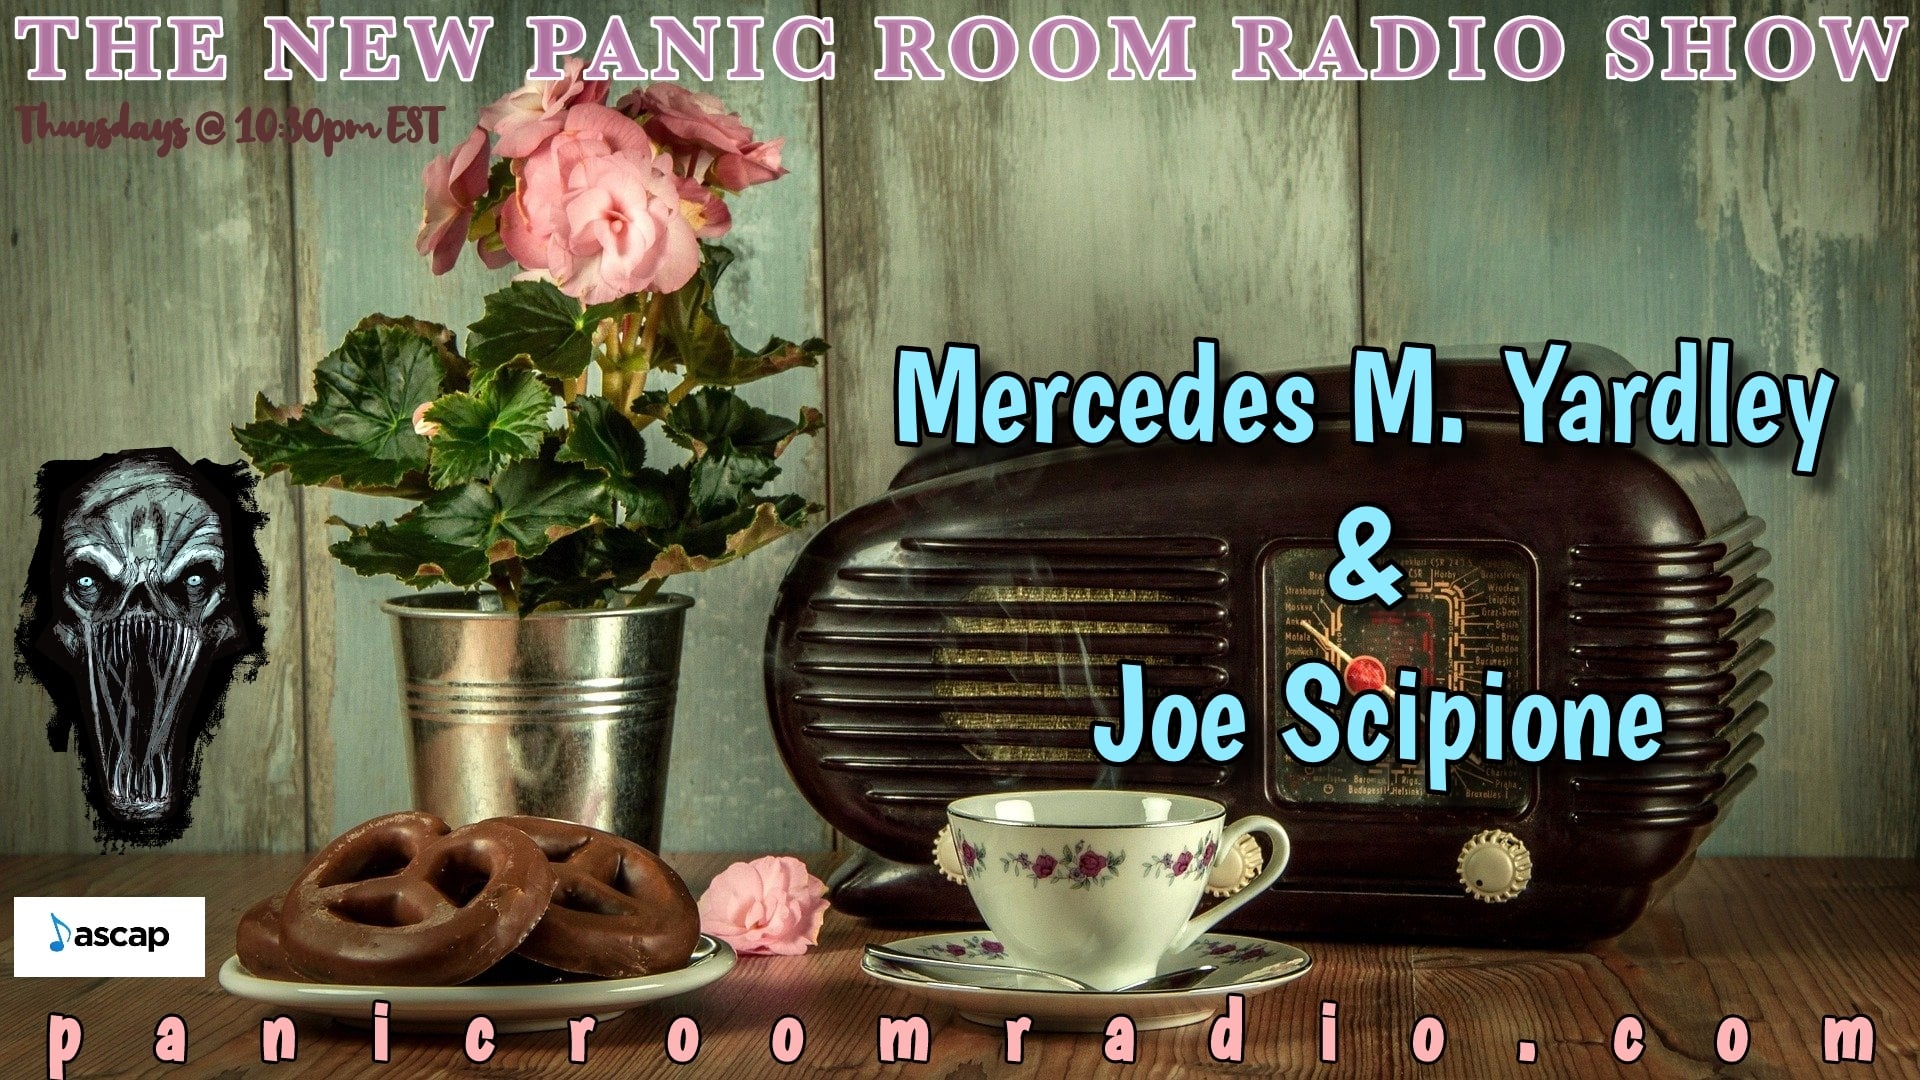 Join Me on The New Panic Room Radio Show!